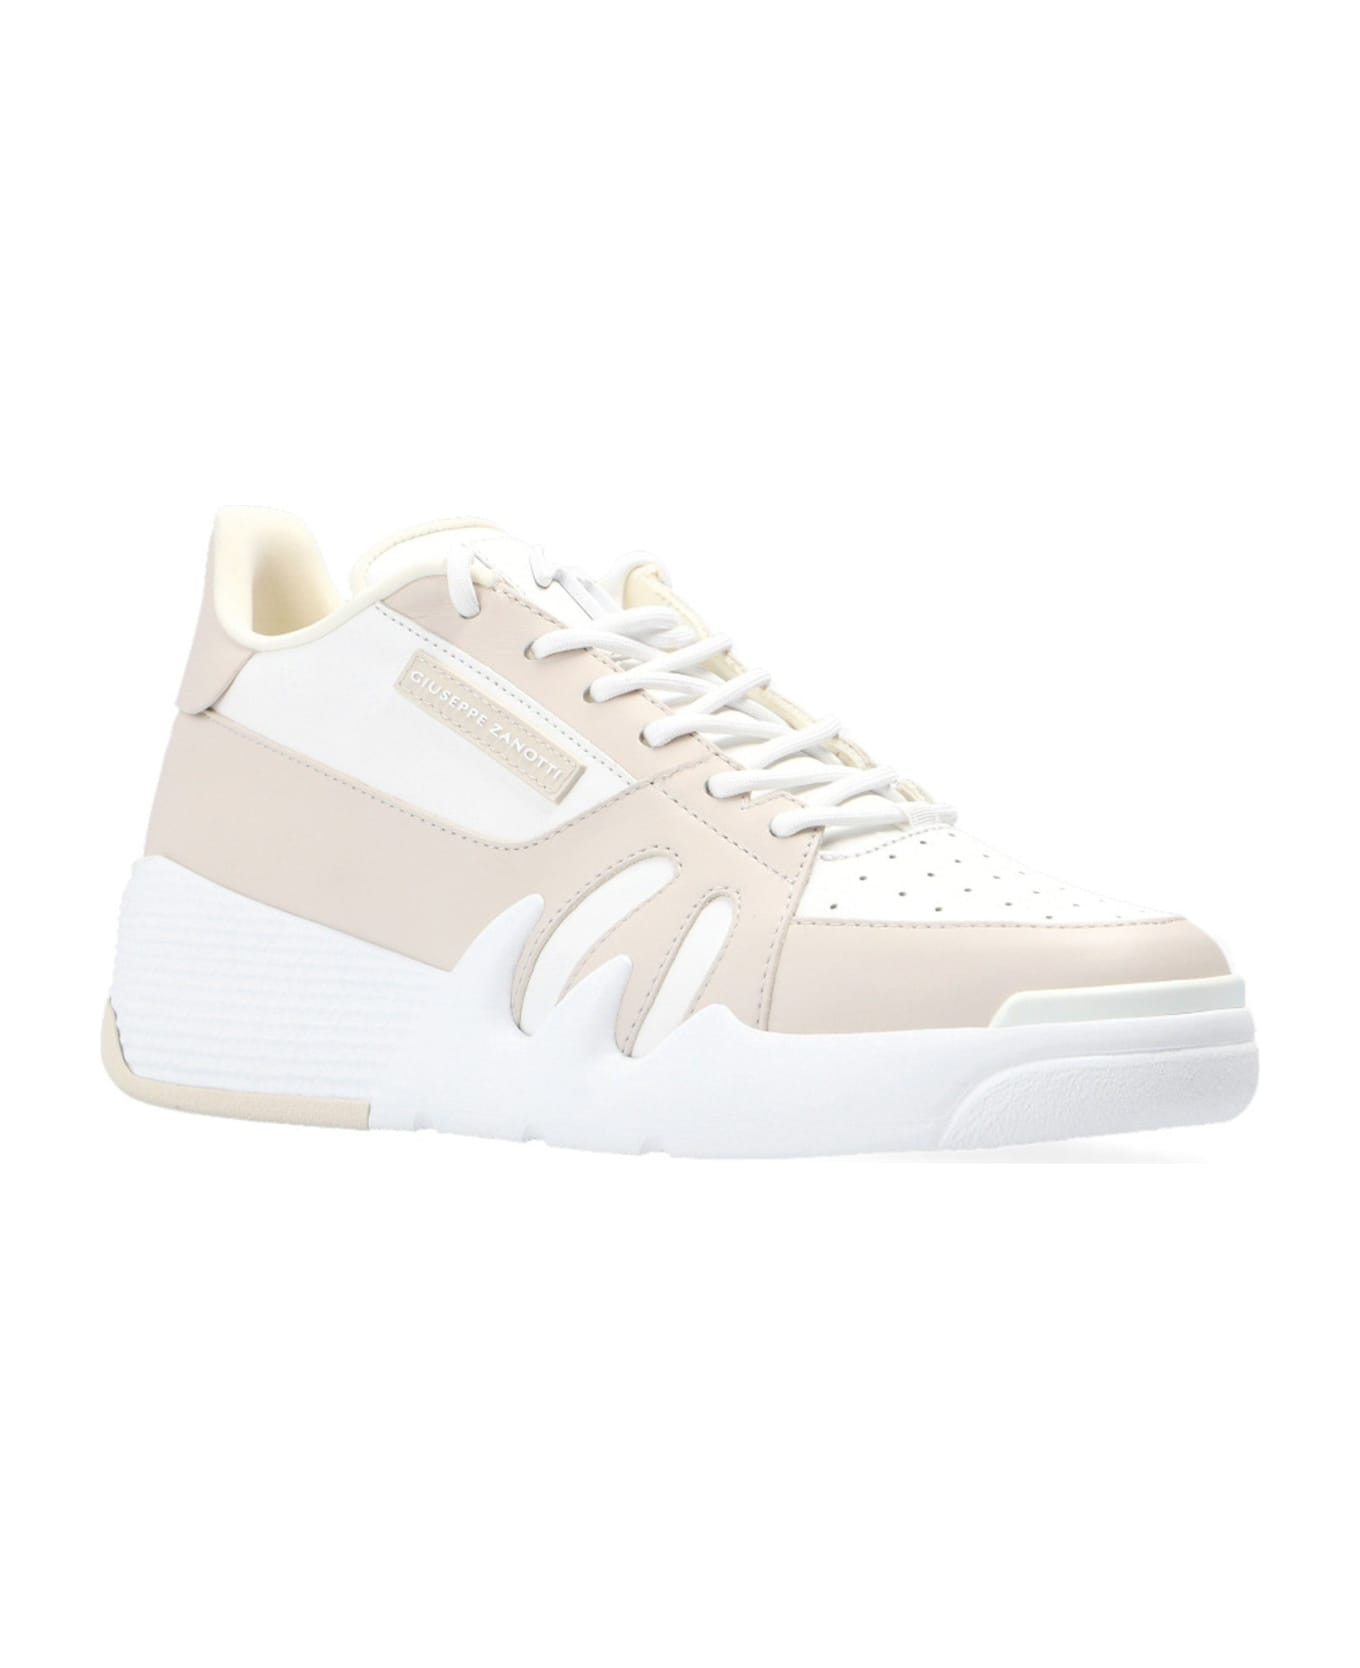 Giuseppe Zanotti Talon Leather Sneakers - White